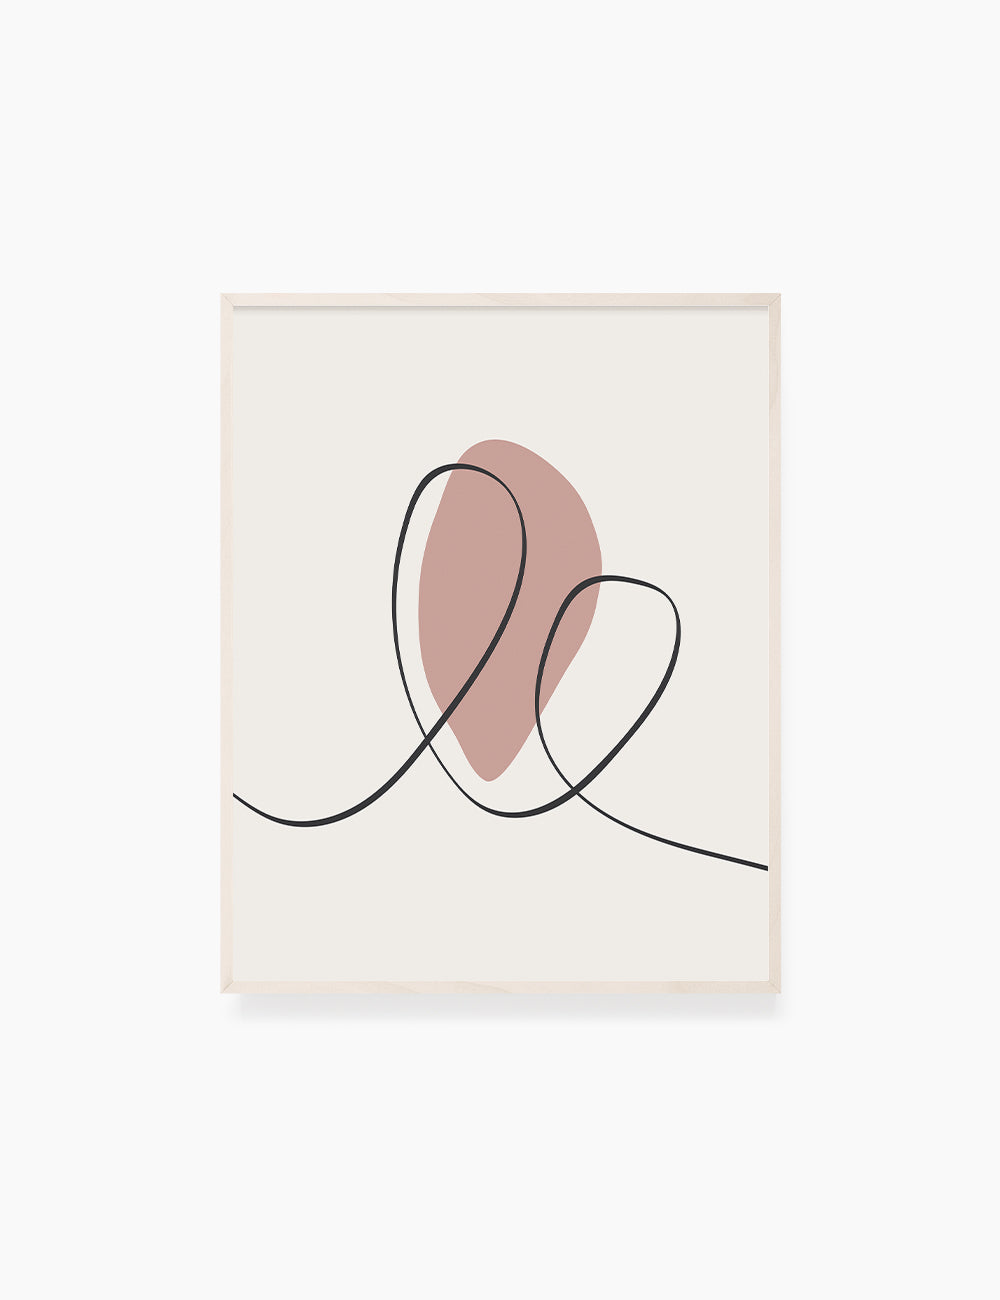 MINIMAL LINE ART. Abstract Heart Shape. Boho Aesthetic. Blush. Rose. Pale Red. Beige. Black. Printable Wall Art Illustration. - PAPER MOON Art & Design